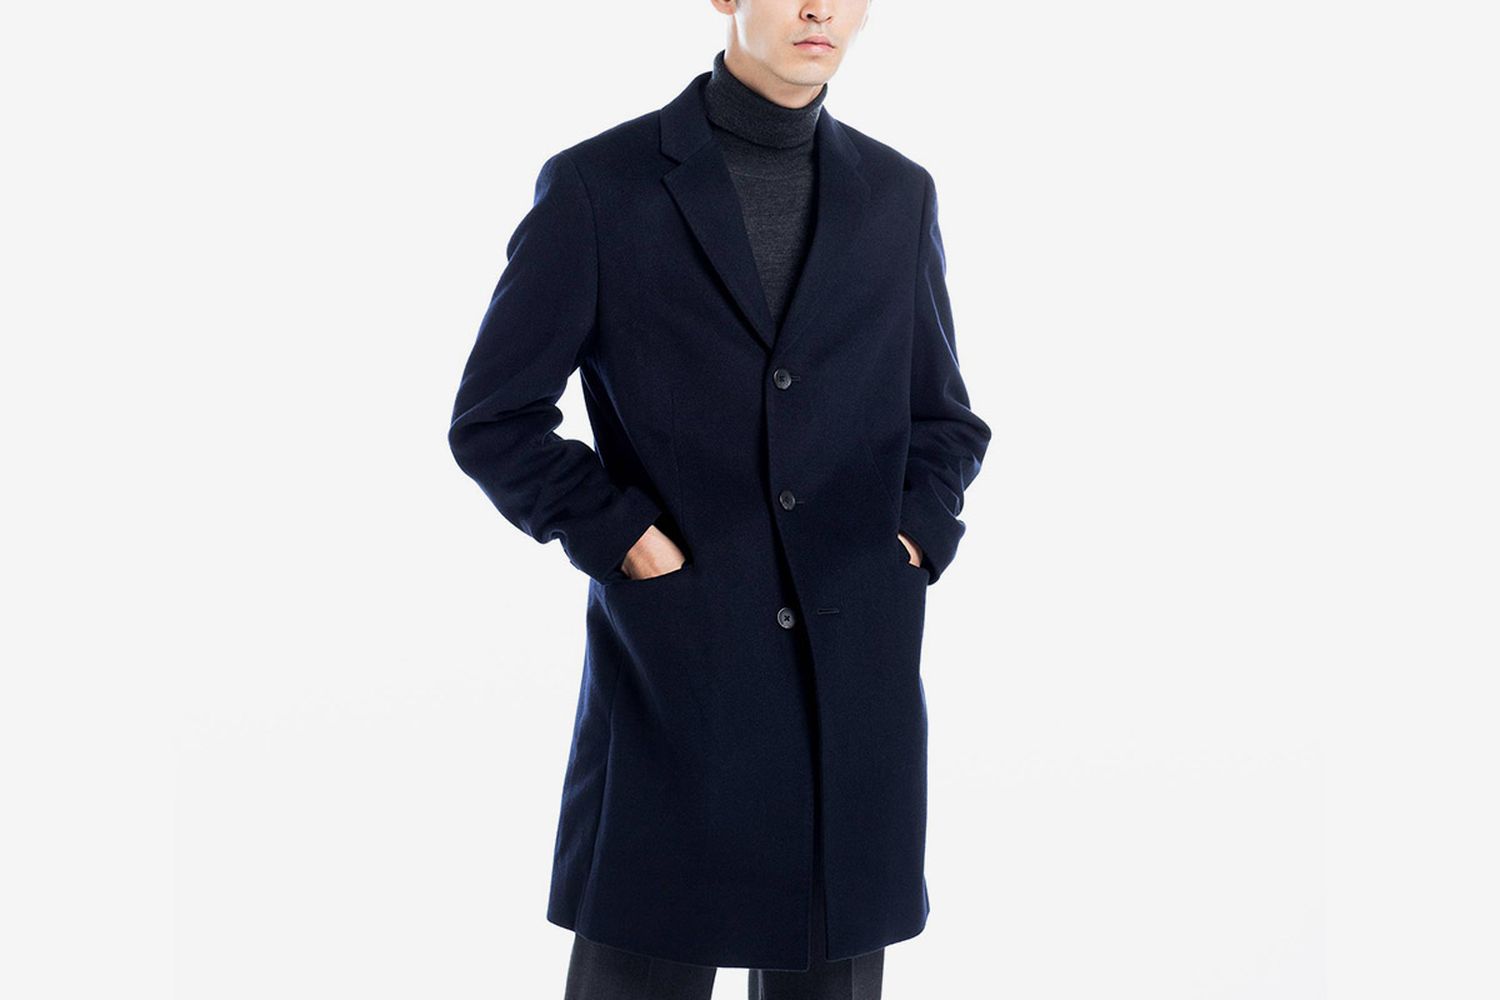 7 Wool Overcoats That Won't Break the Bank